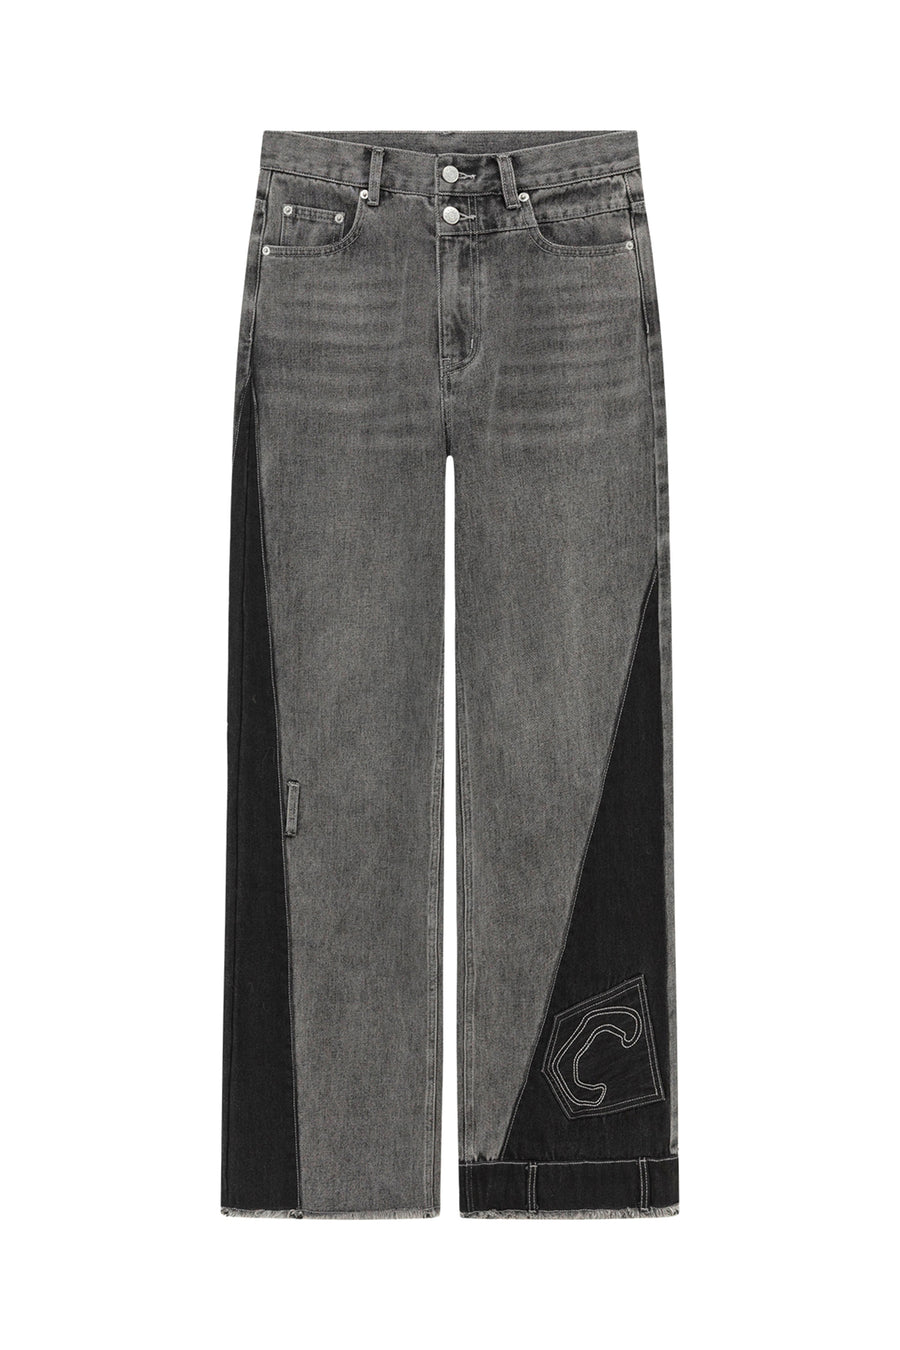 CHUU Cut Patchwork Hem  Two Toned Denim jeans